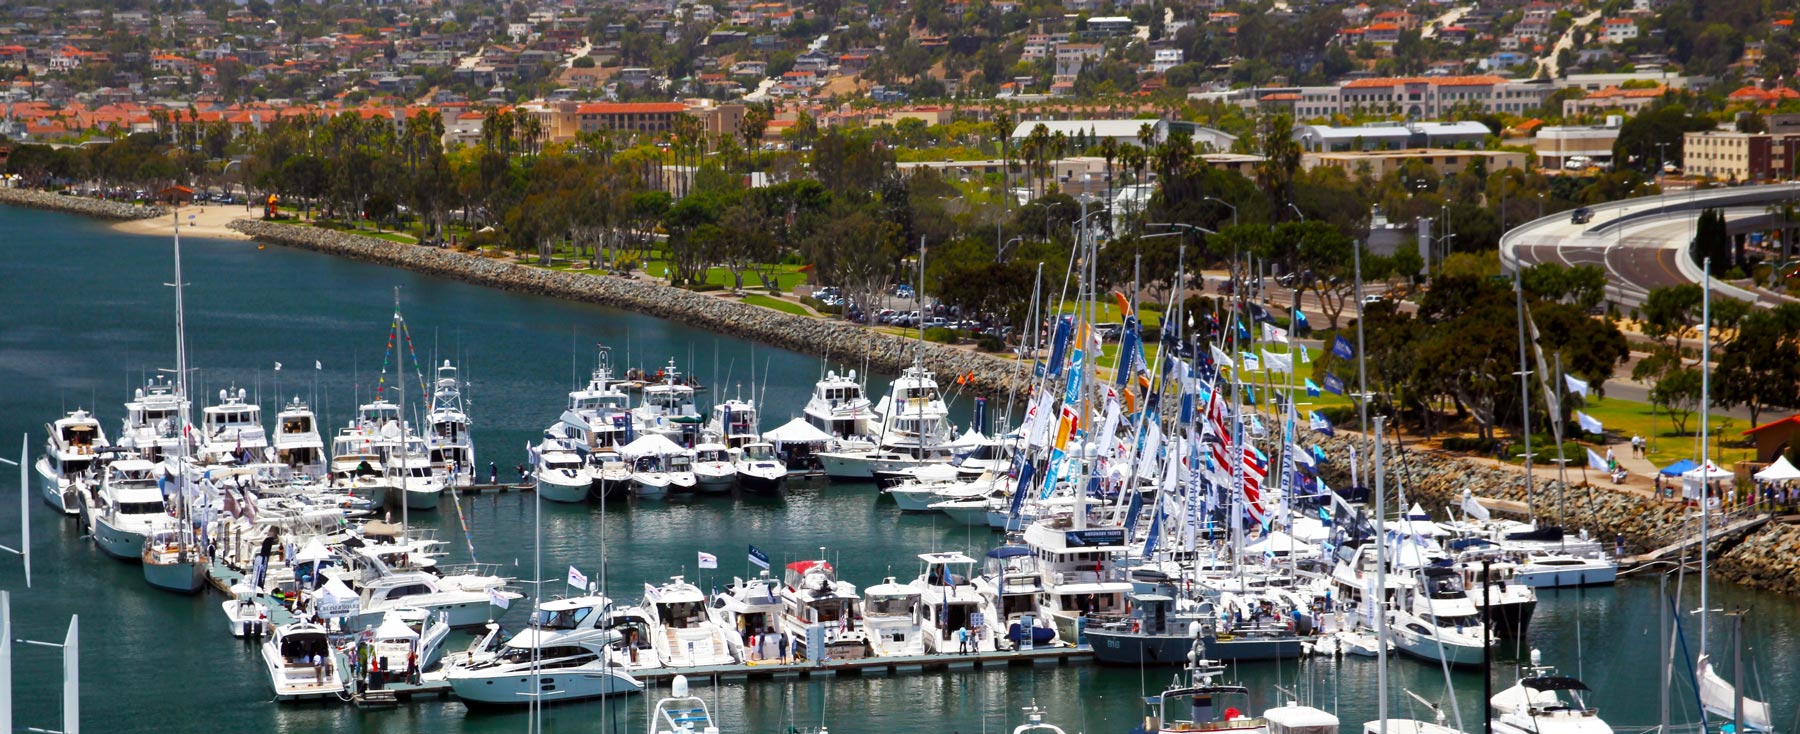 San Diego International Boat Show